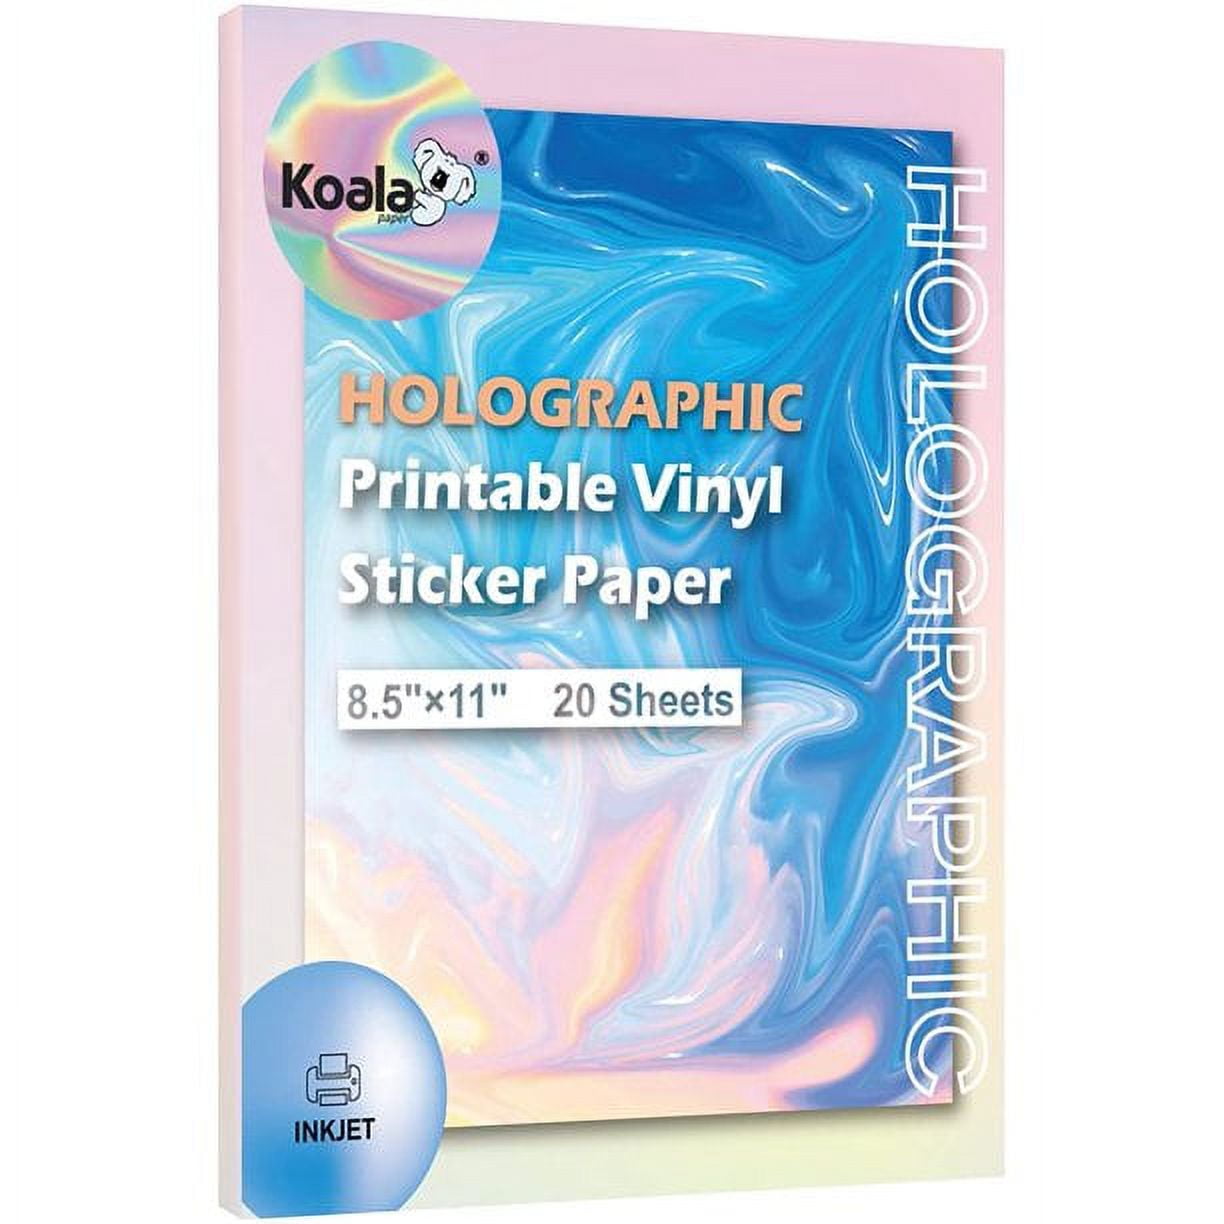 Koala Holographic Sticker Paper Clear RAINBOW, Transparent Laminting S –  koalagp